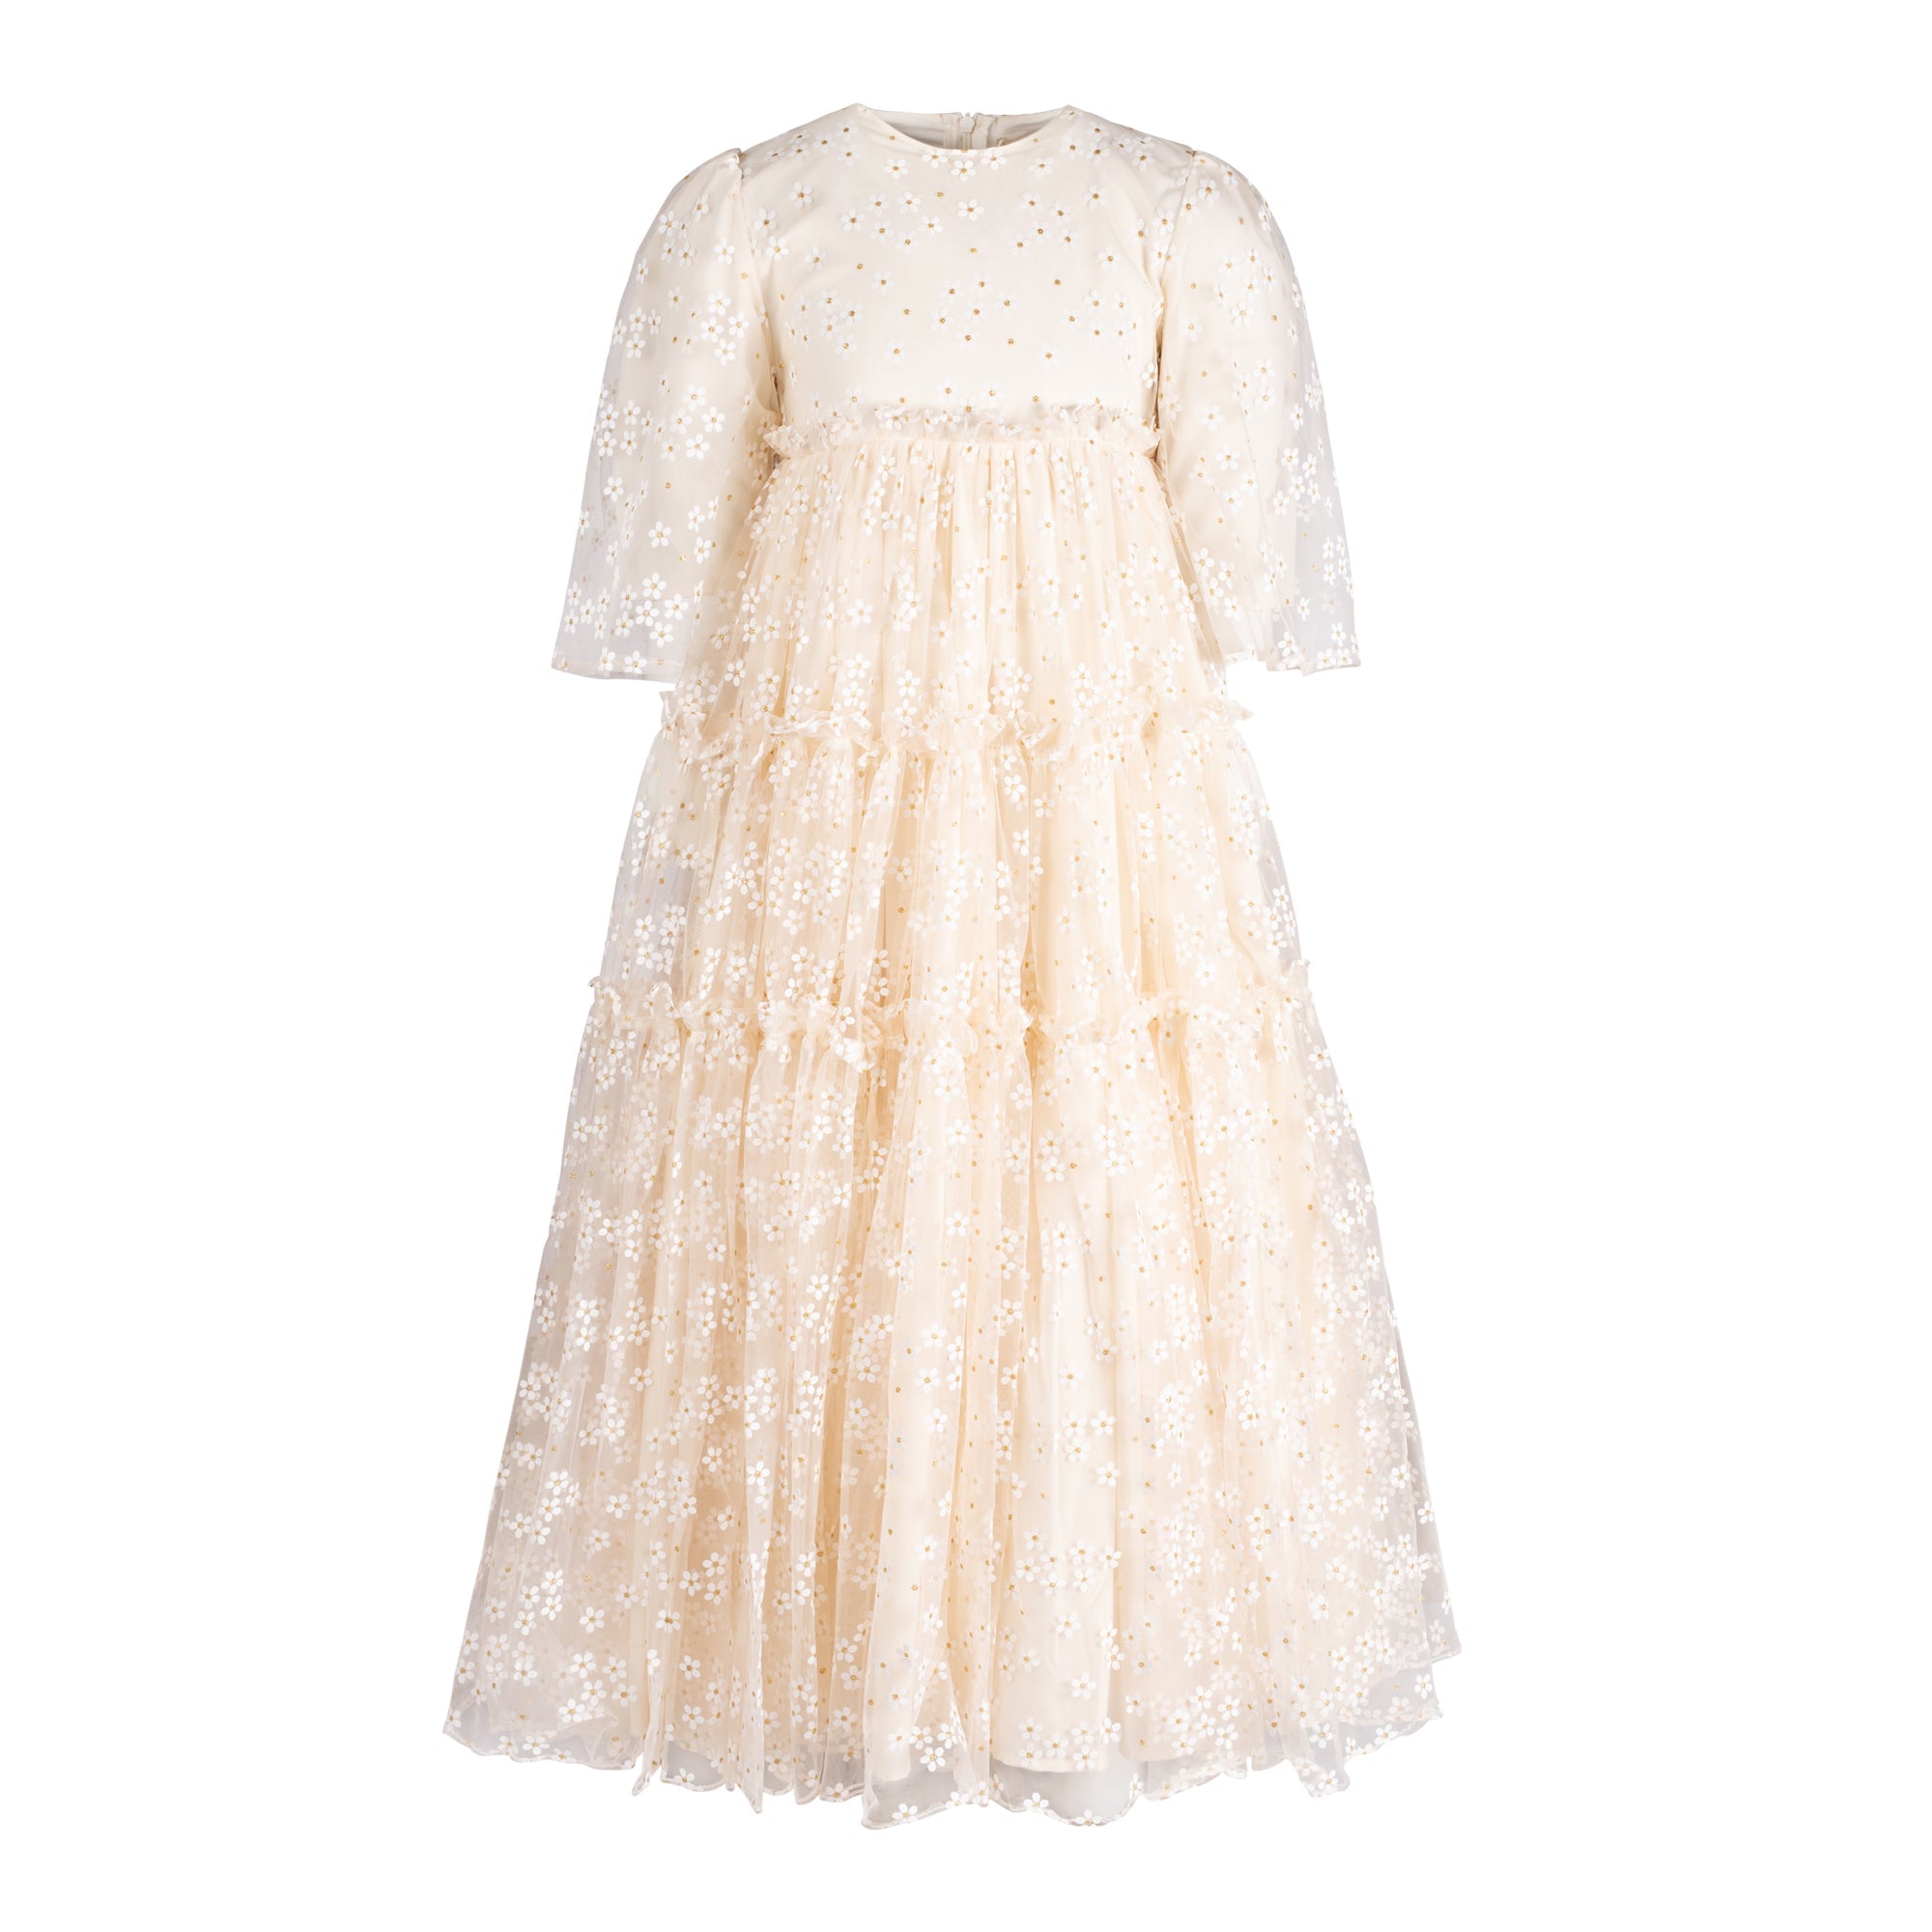 W-239 Cotton Girl's dress Size 3T, 4T only – OhioBoutiqueImporter